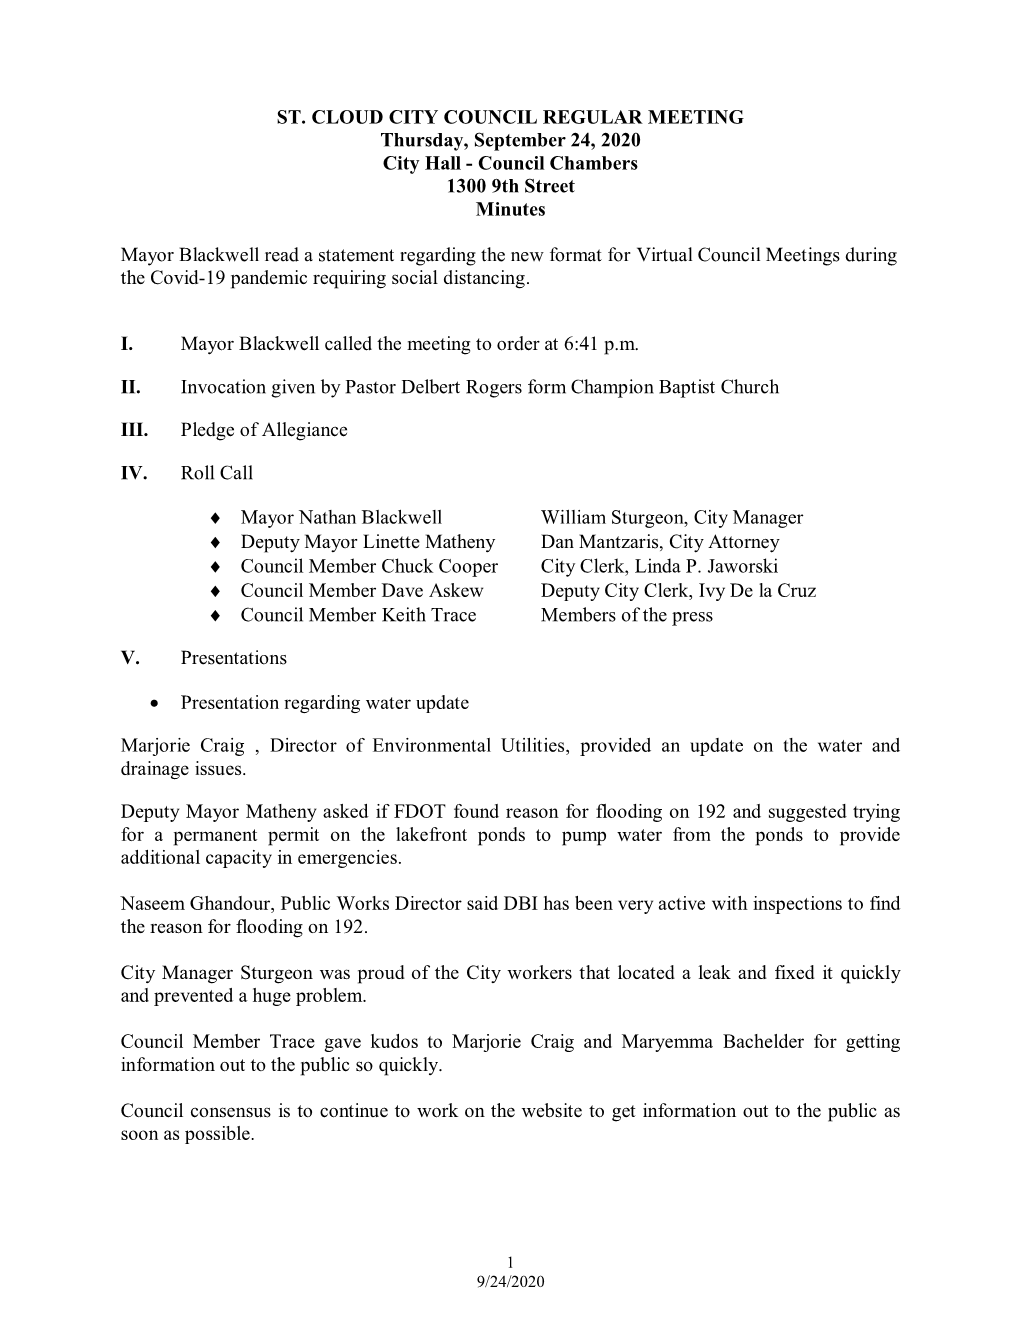 09-24-2020 Council Meeting Minutes (PDF)